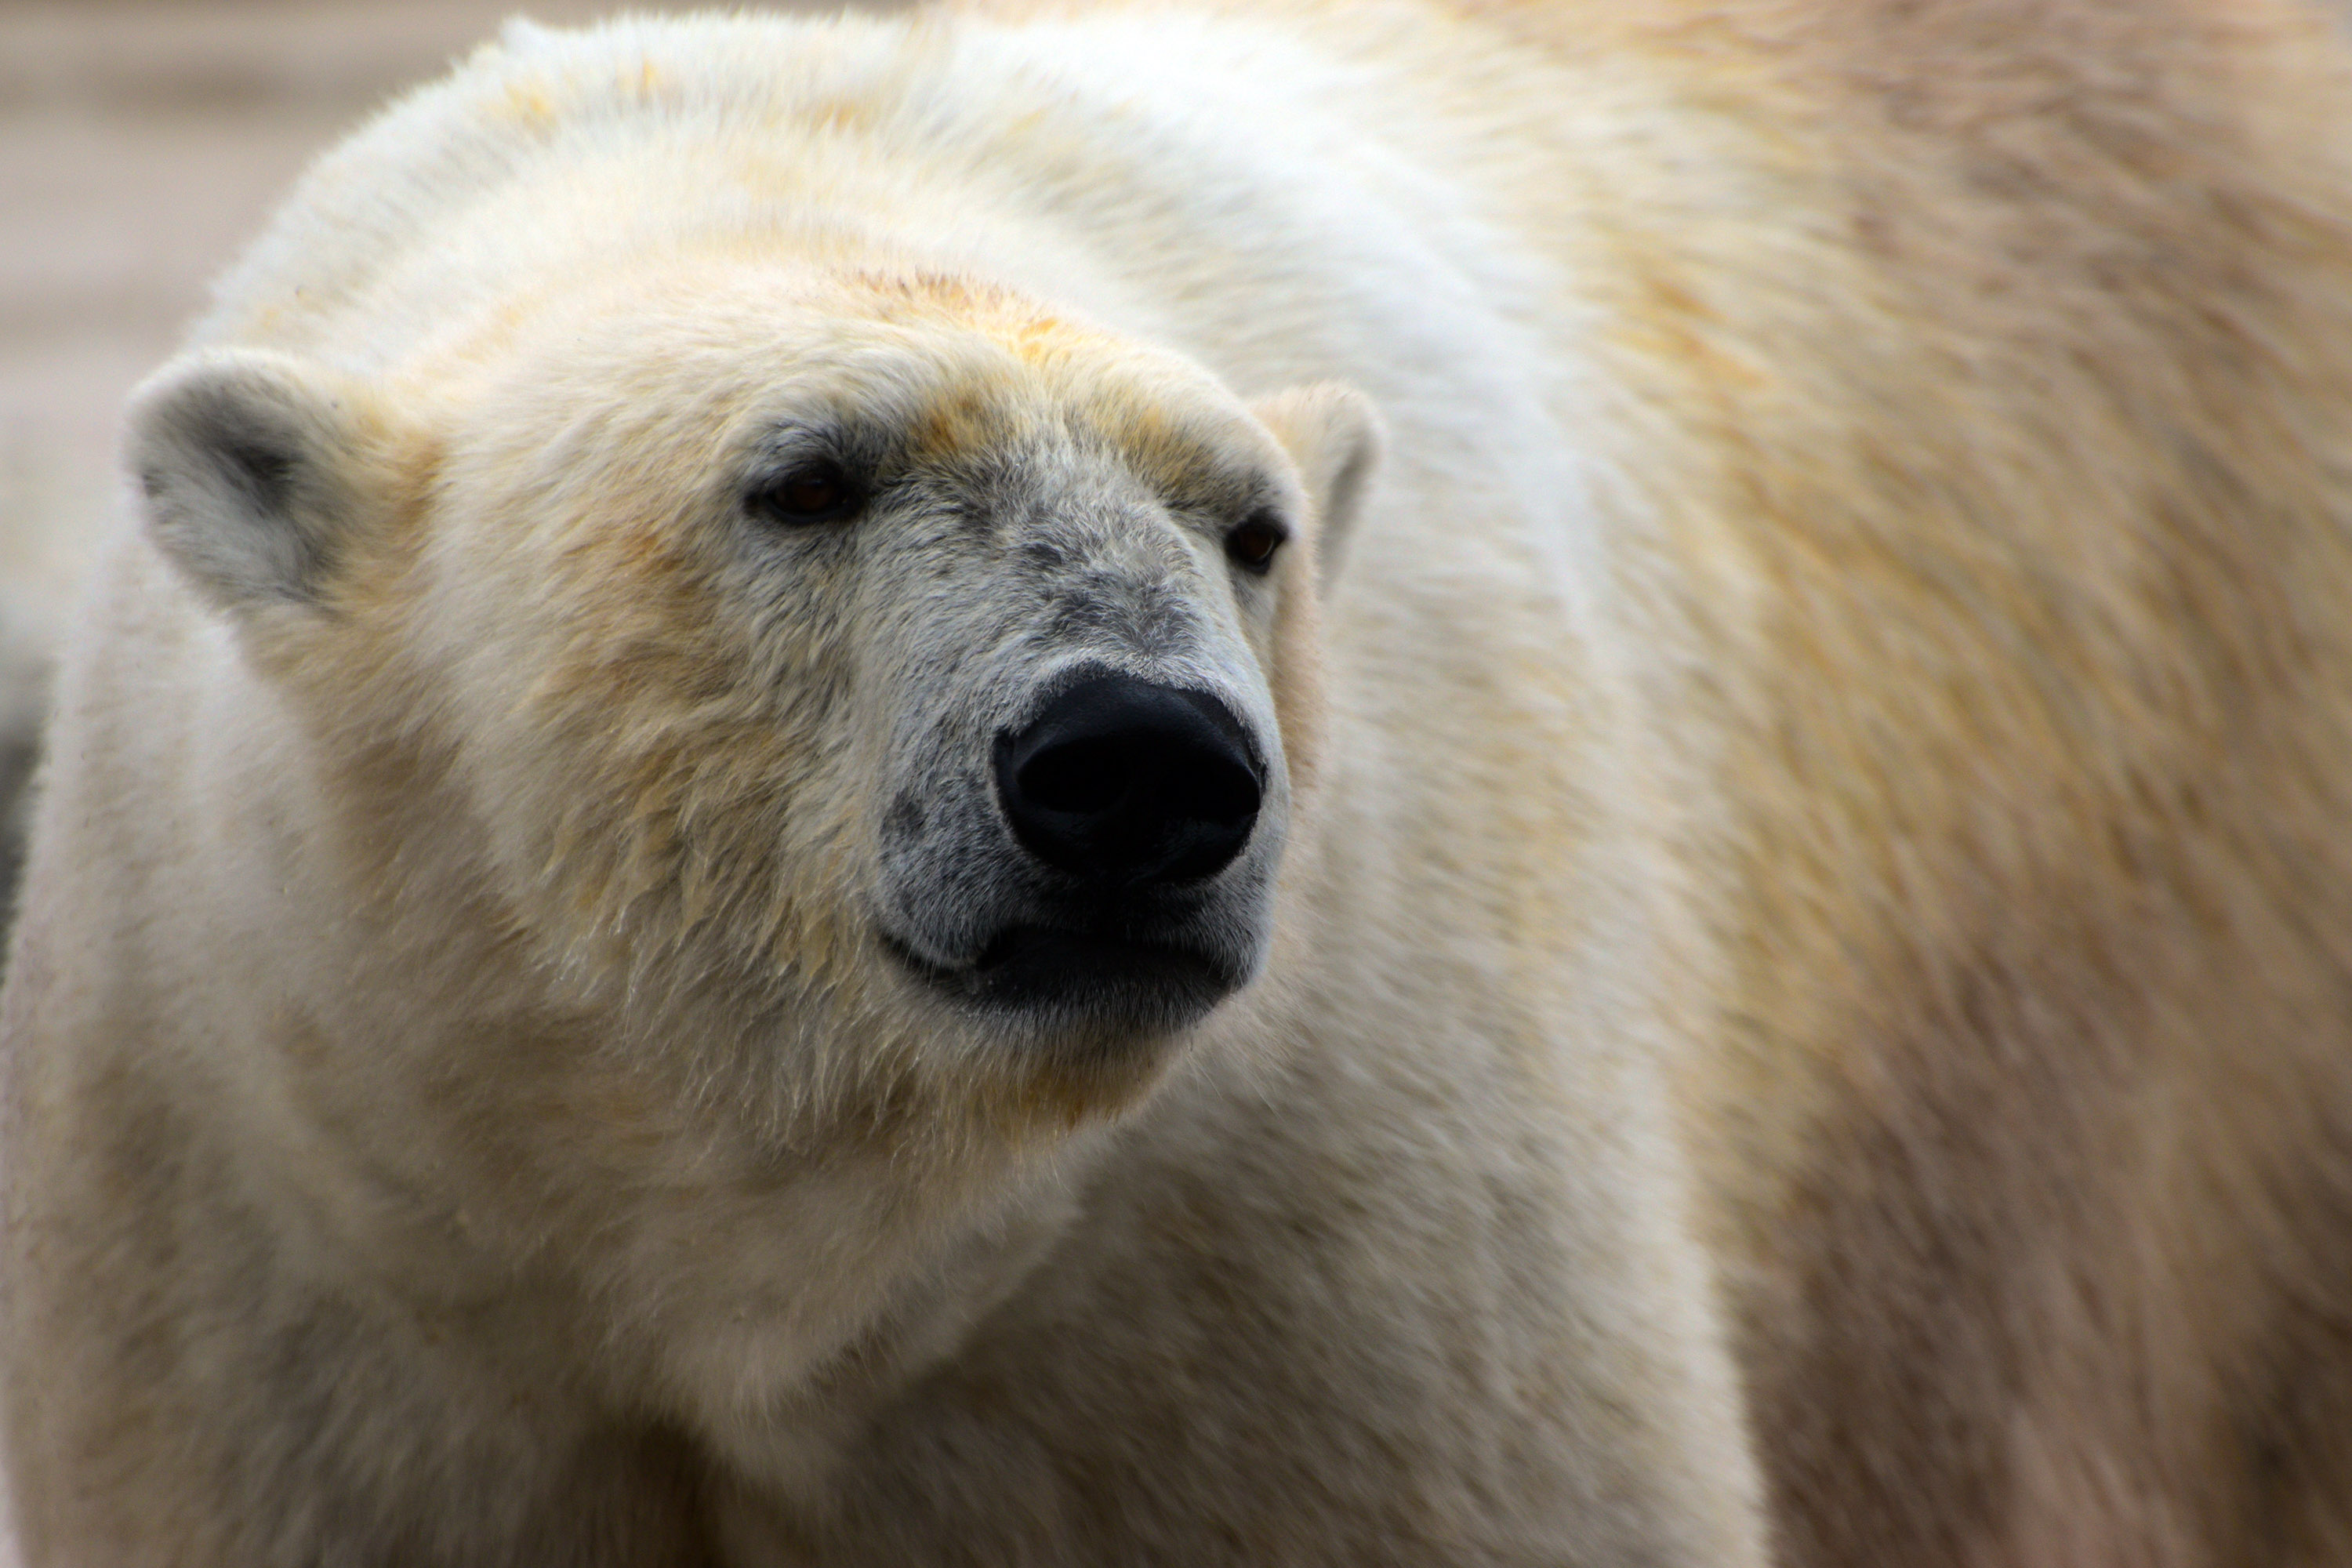 Polar bear at the Detroit Zoo